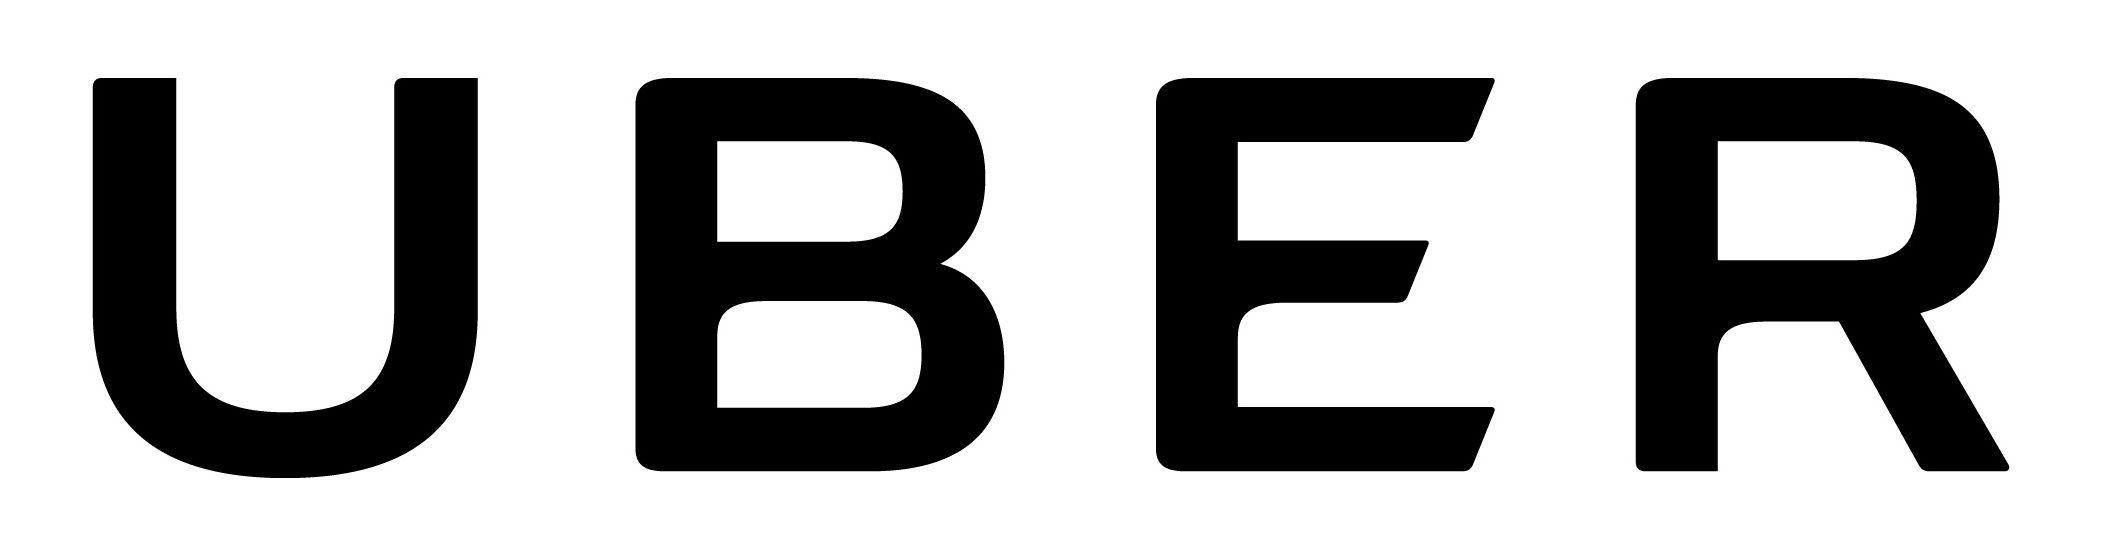 Uber Driver Logo - Uber driver Logos